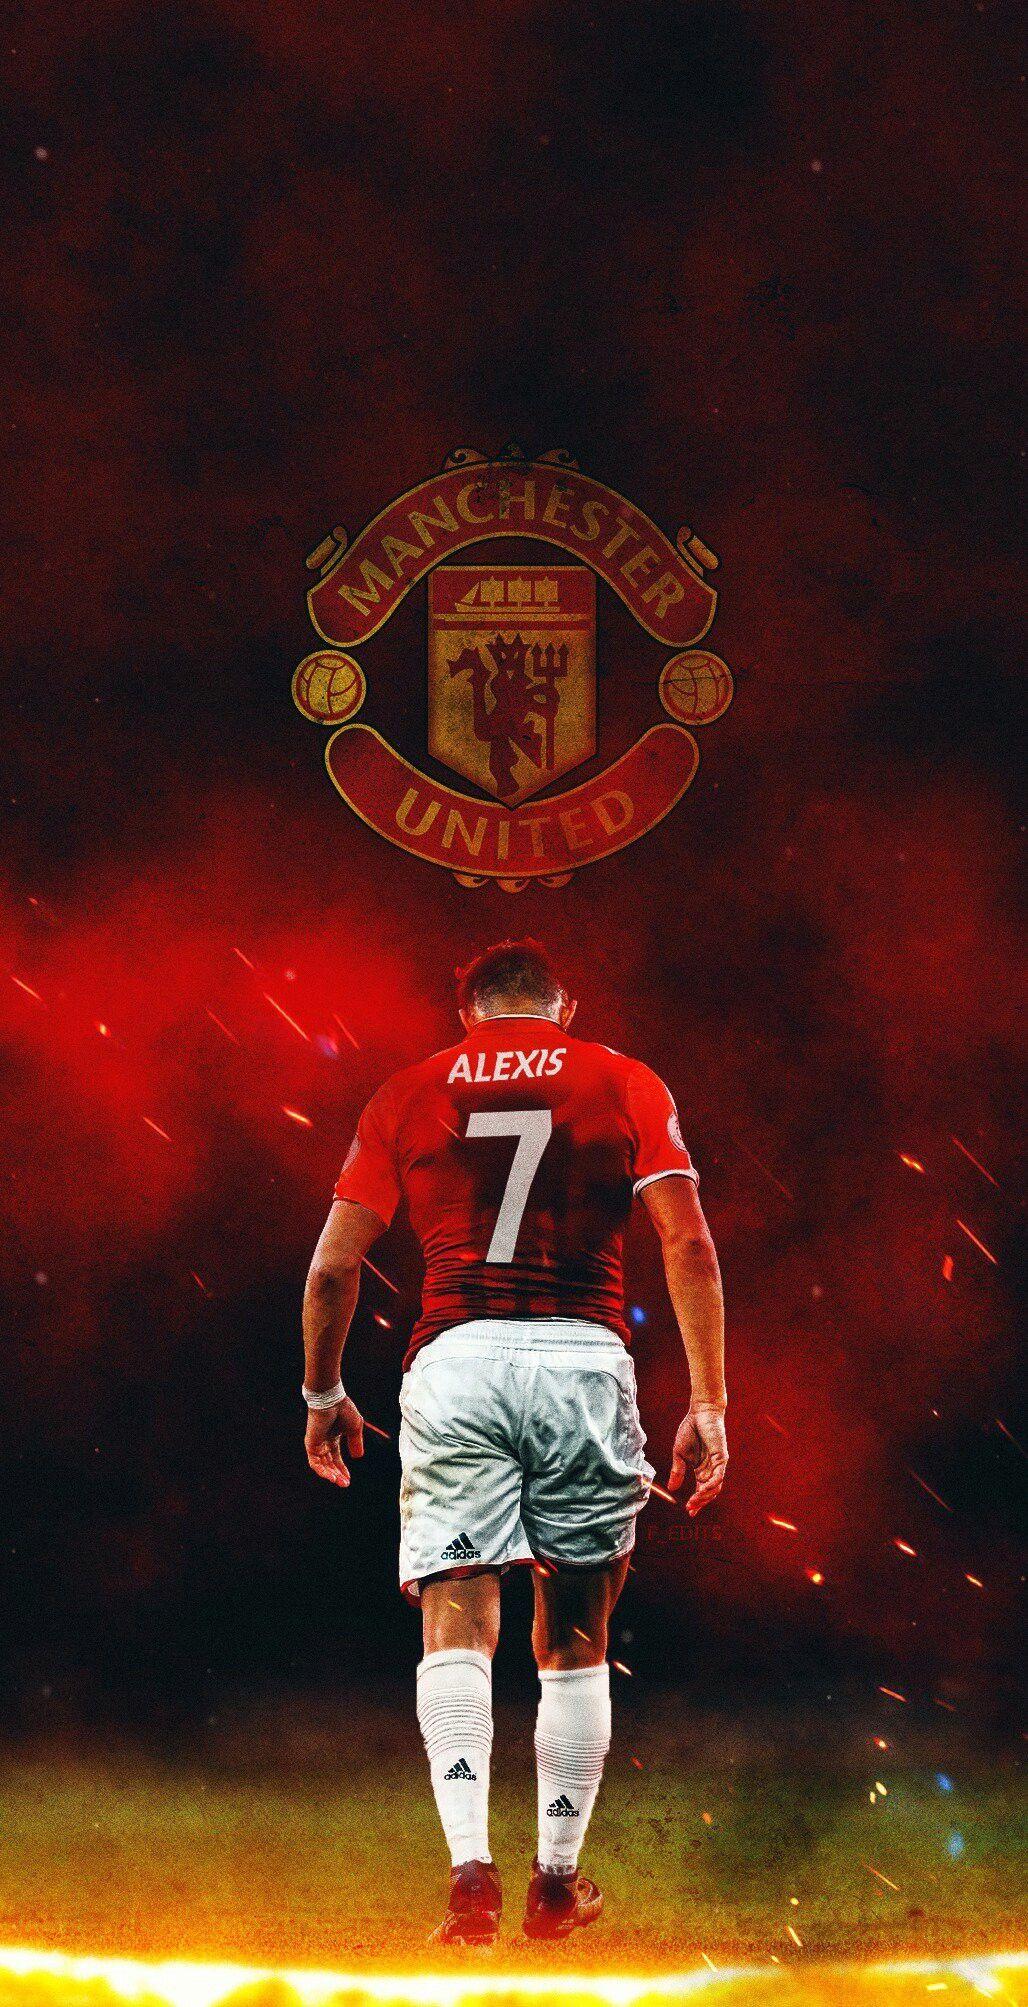 Alexis Sanchez no7. Manchester United Football Club